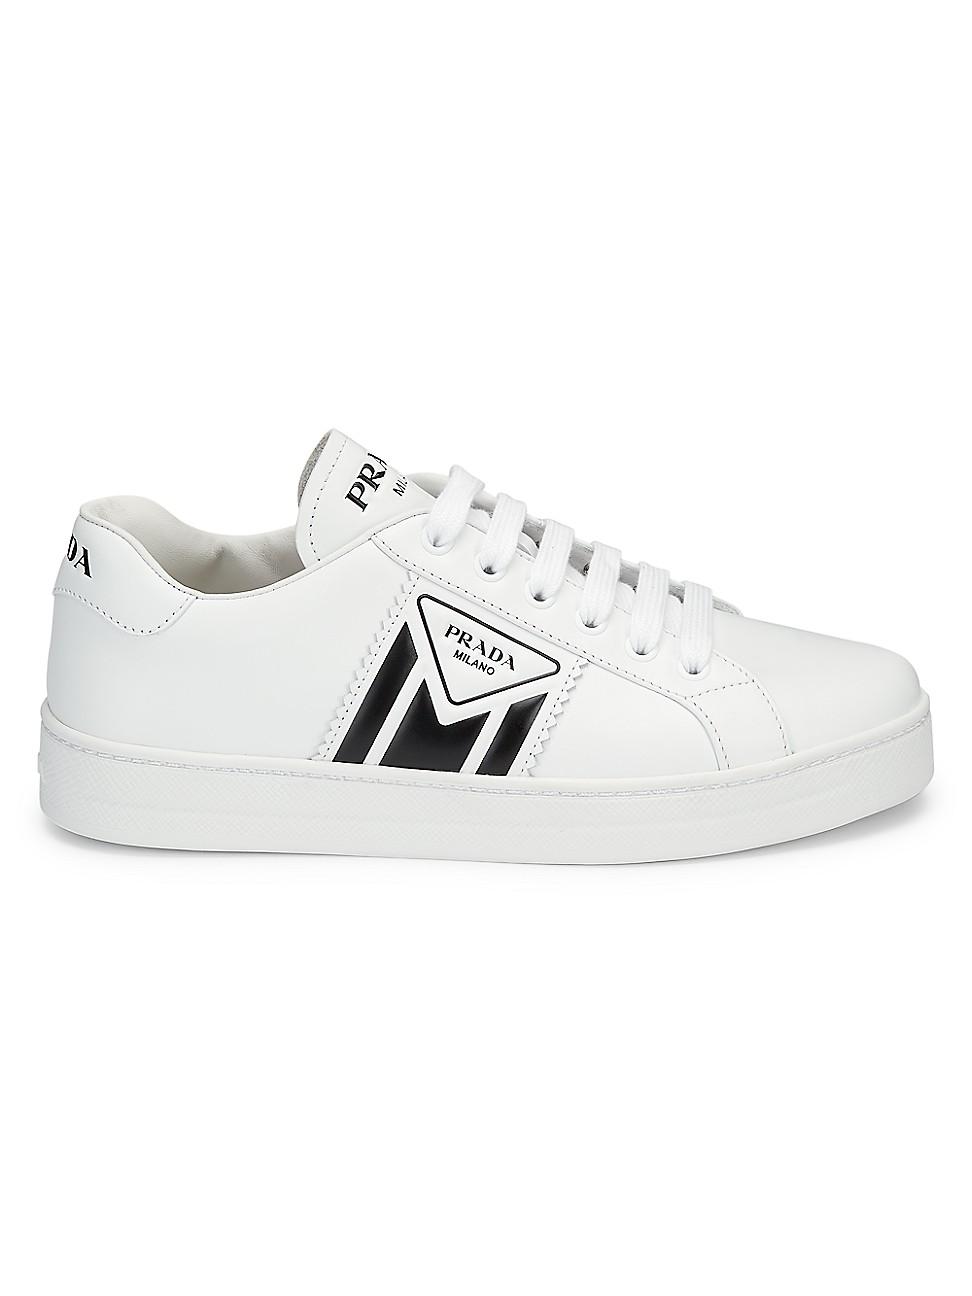 Prada Logo Stripe Leather Sneakers in White | Lyst